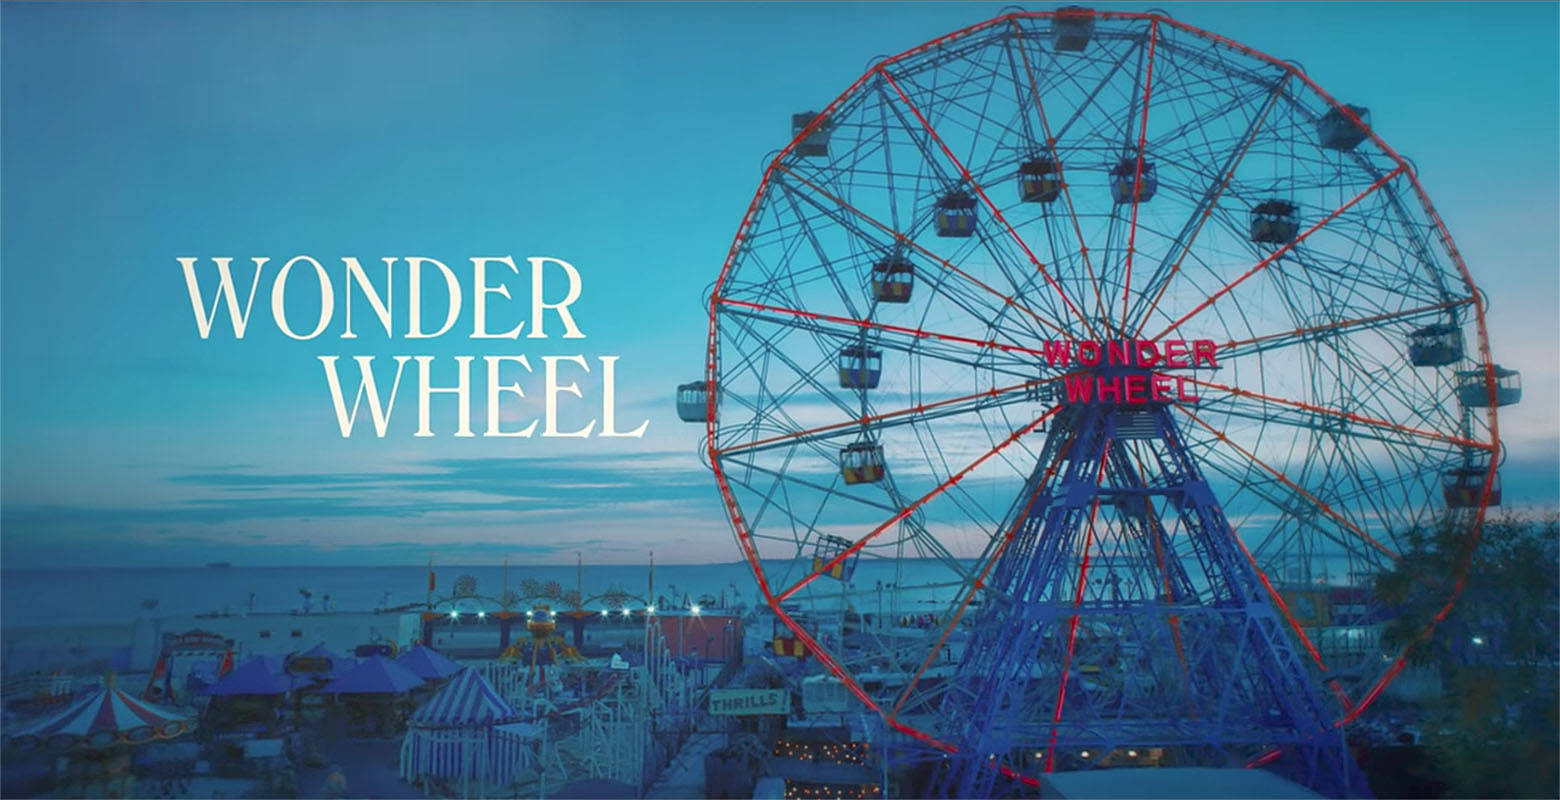 Wonder wheel coney island woody allen nyc untapped cities